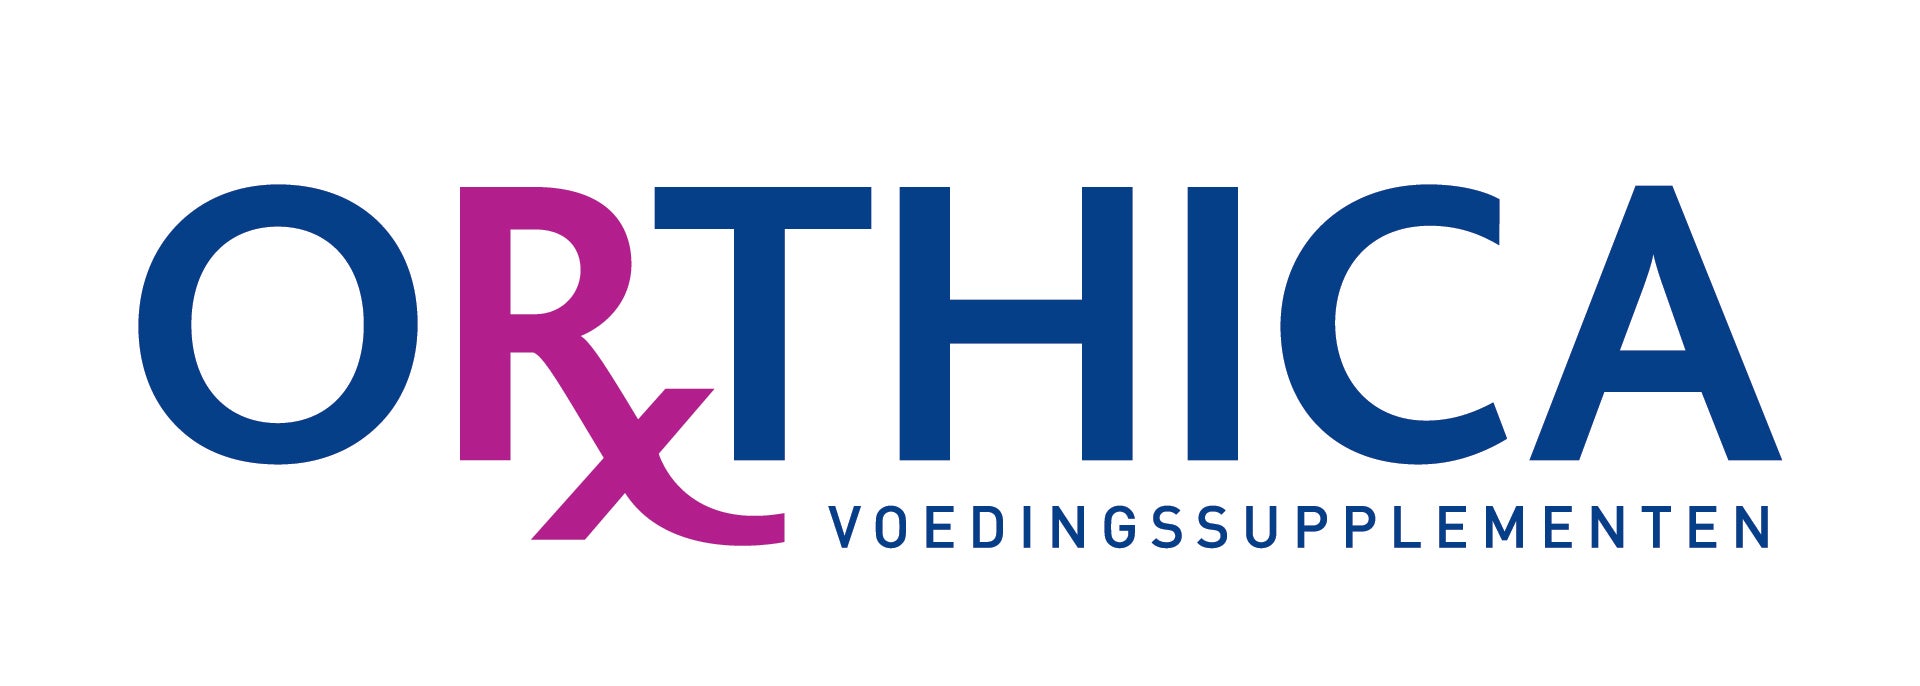 Orthica Logo